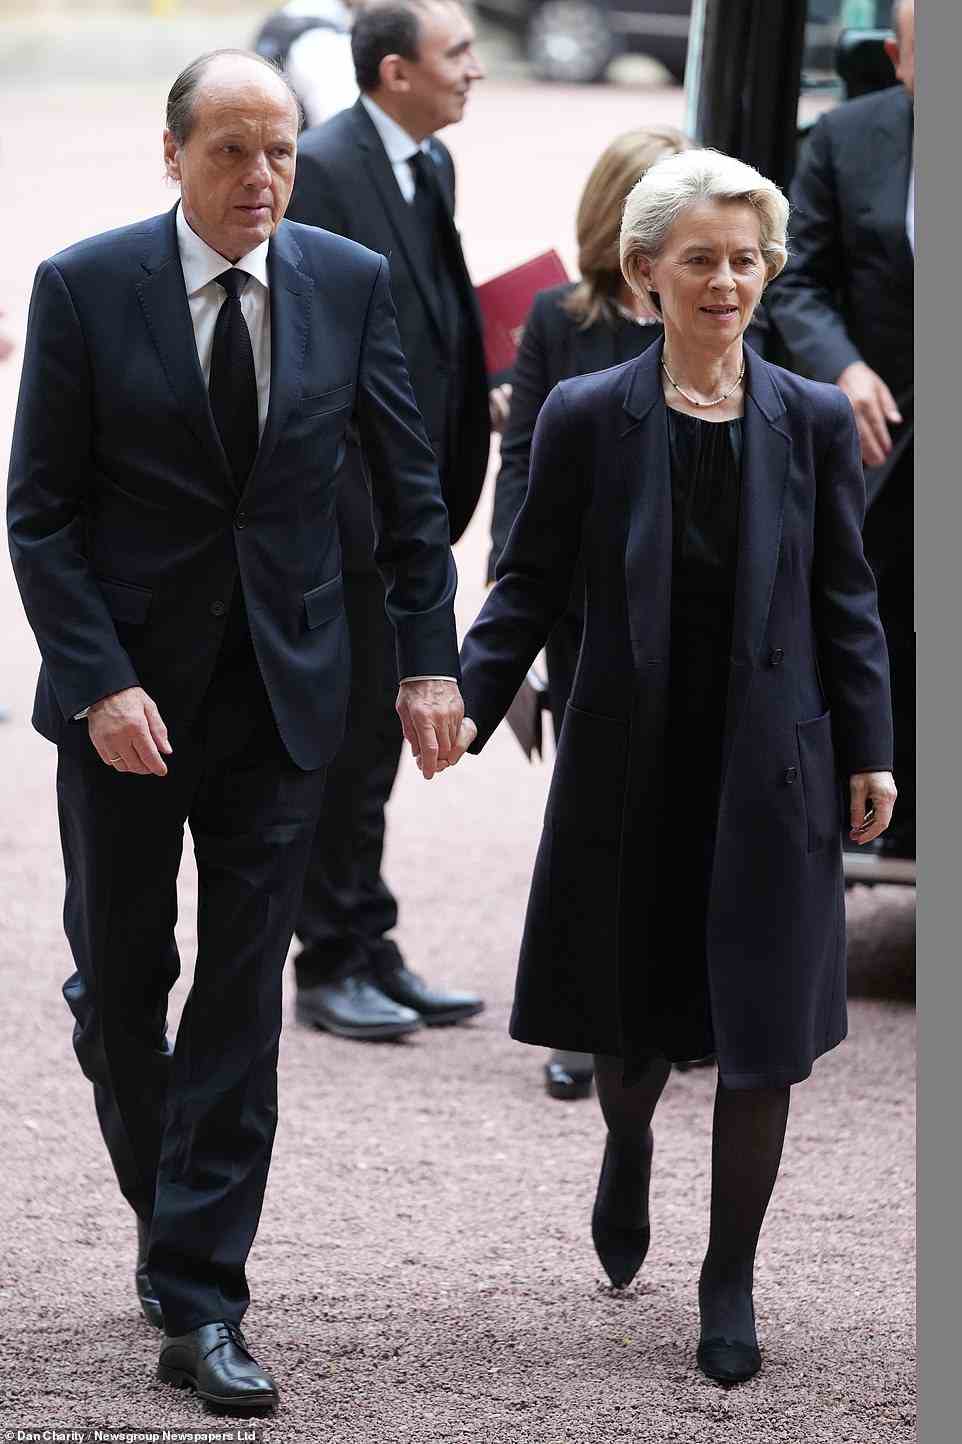 Ursula von der Leyen, the president of the European Commission, and her husband Heiko also arrive